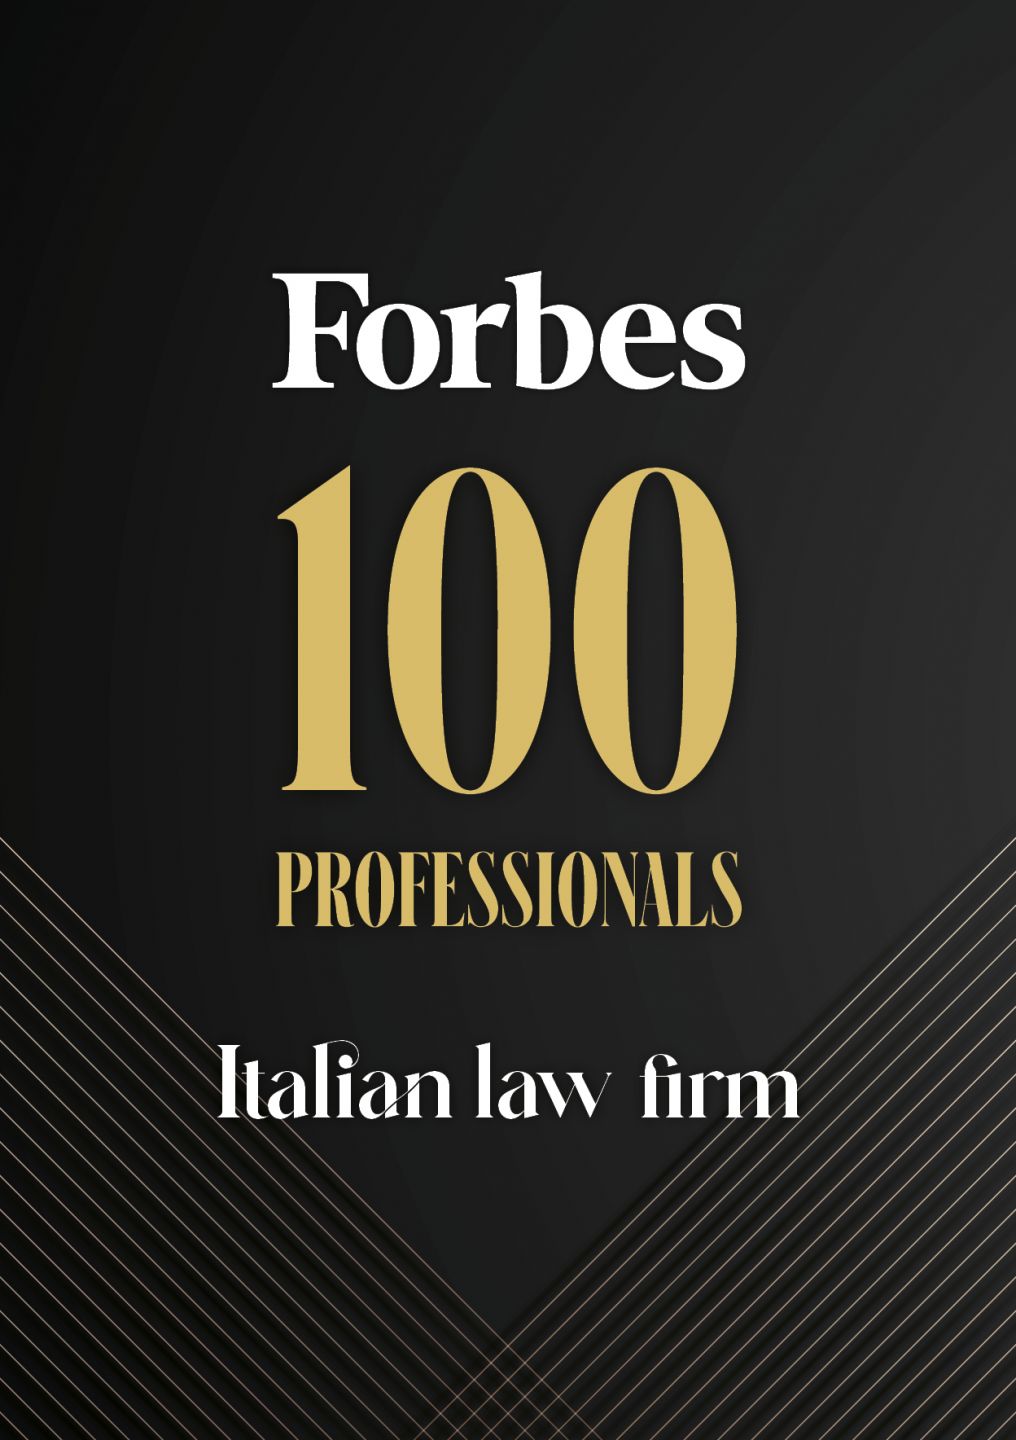 Italian law firm